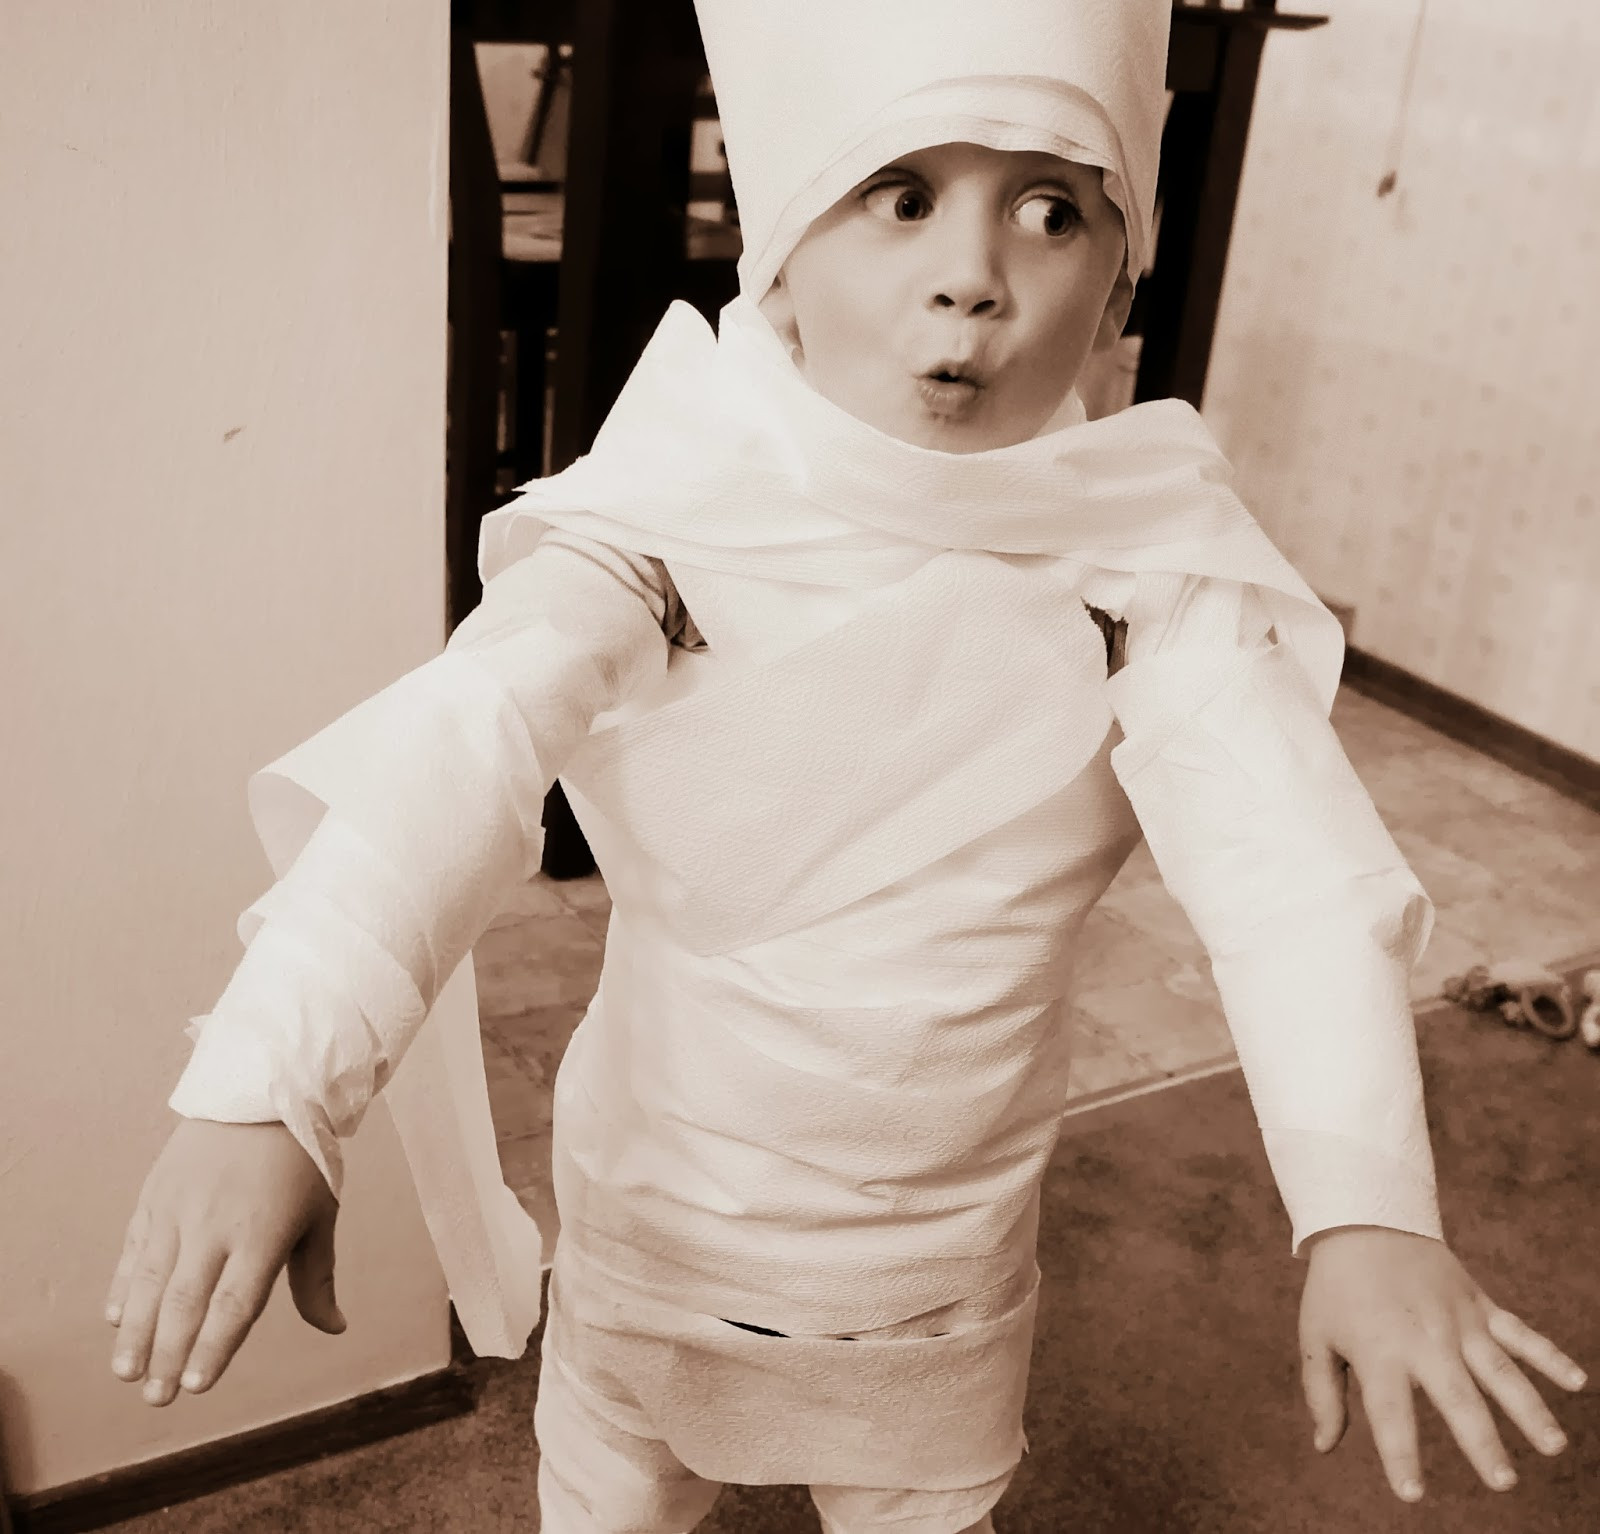 Toilet Paper Halloween Costume
 Easy Toilet Paper Mummy Halloween Game So Festive